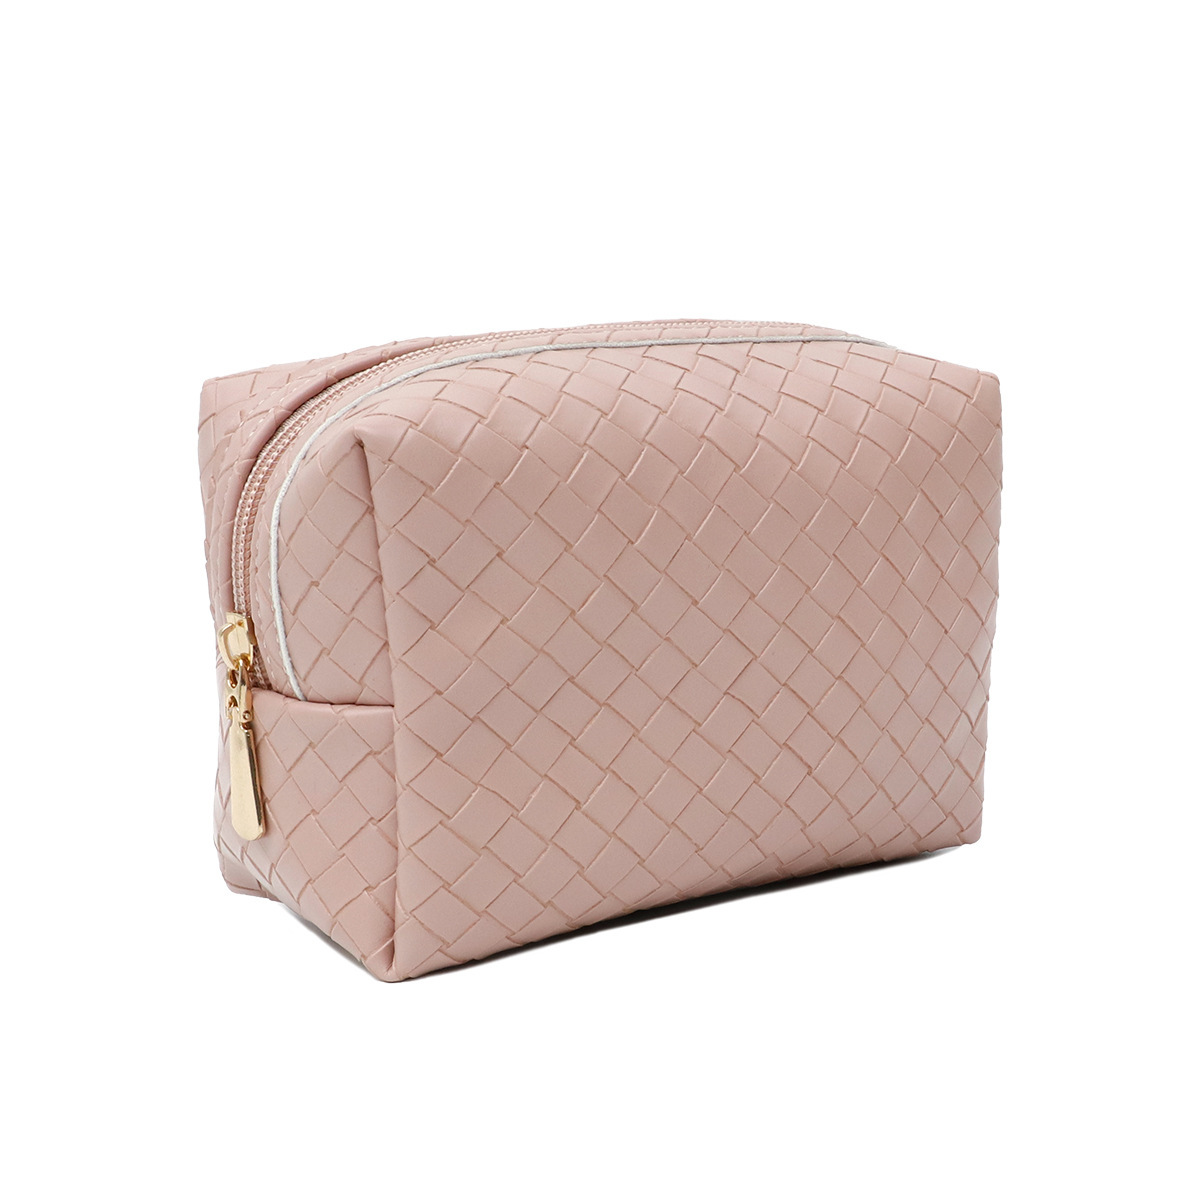 Popular Amazon Cross-Border Leather Woven Pu Cosmetic Bag Portable Travel Cosmetic Bag Woven Buggy Bag